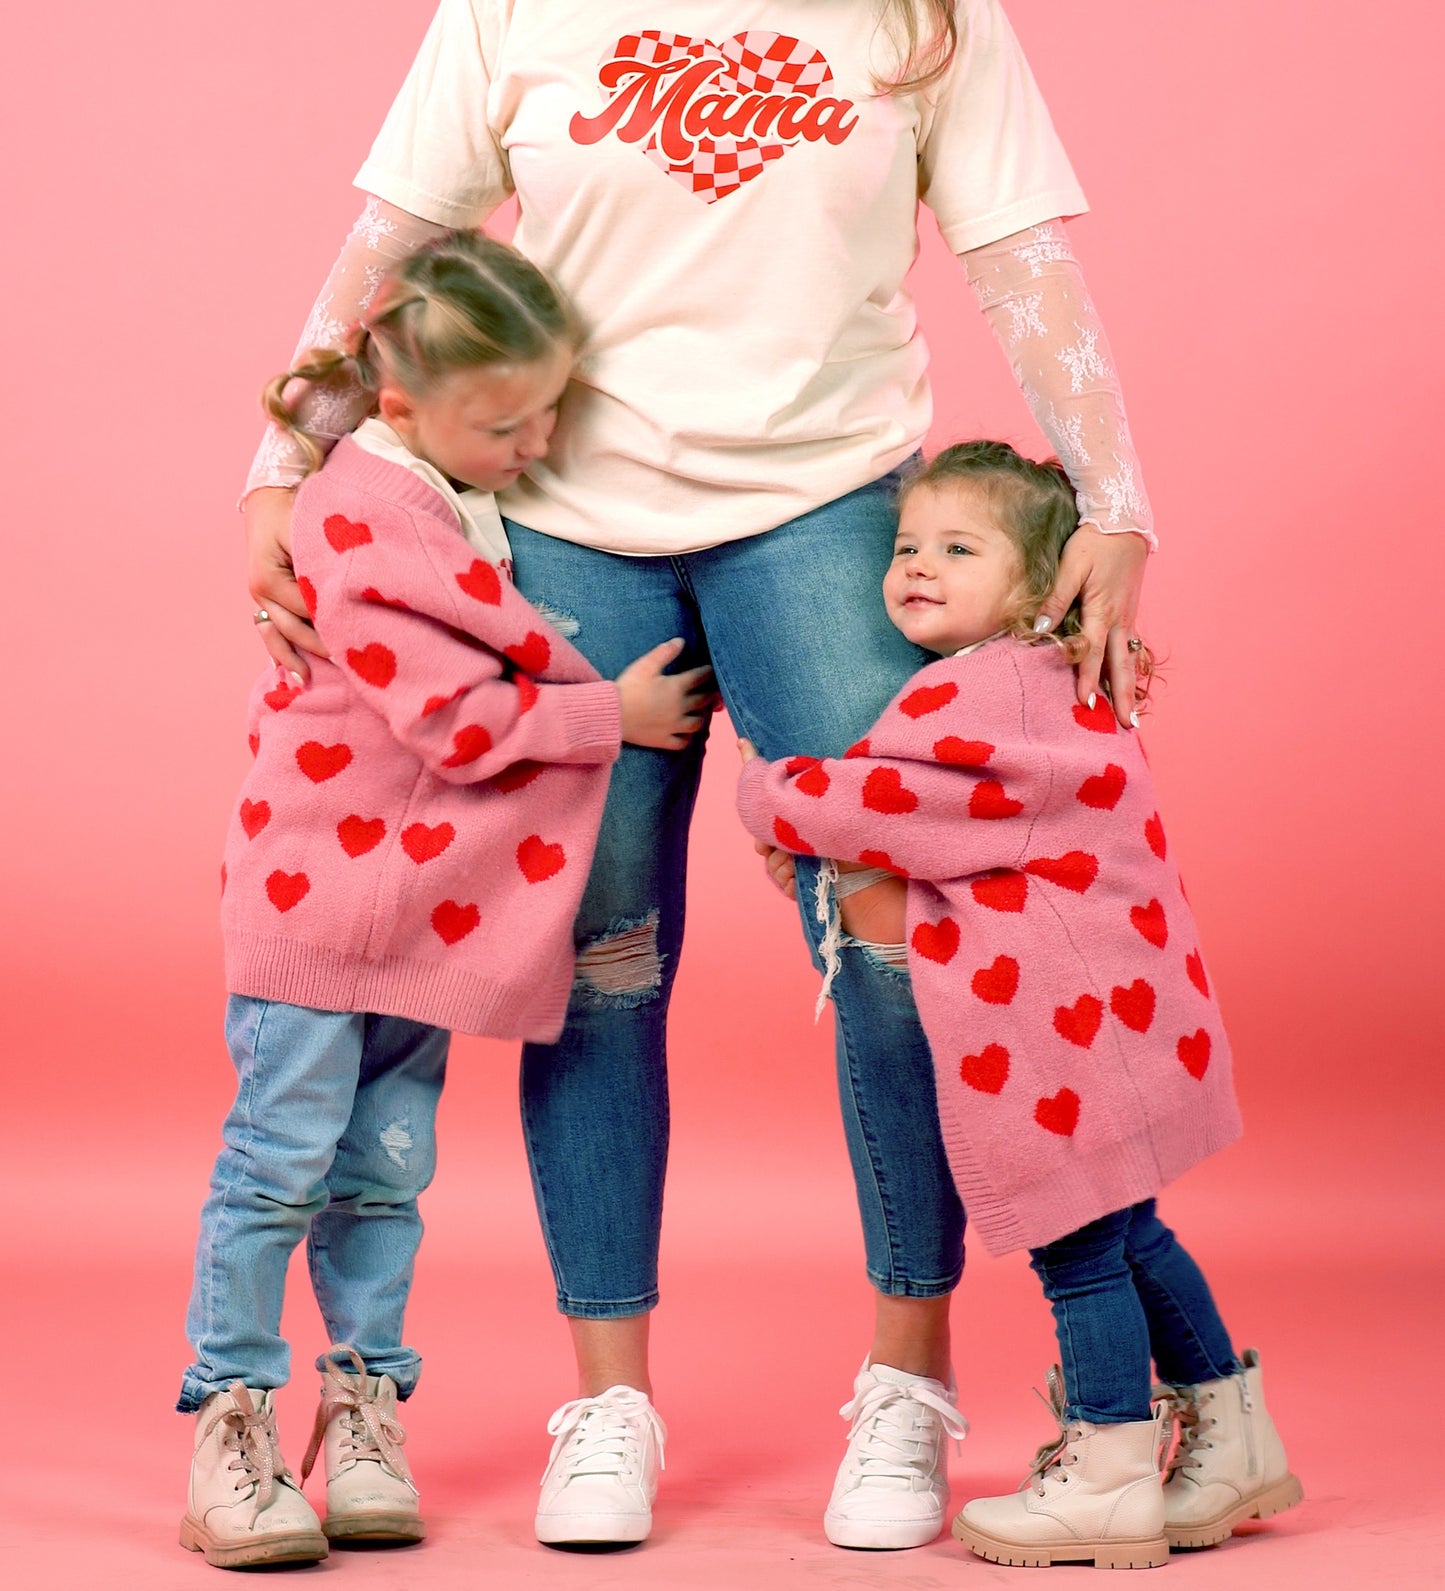 Mama Checkered Heart (Pink/Red) - Tee (Vintage Natural, Short Sleeve)